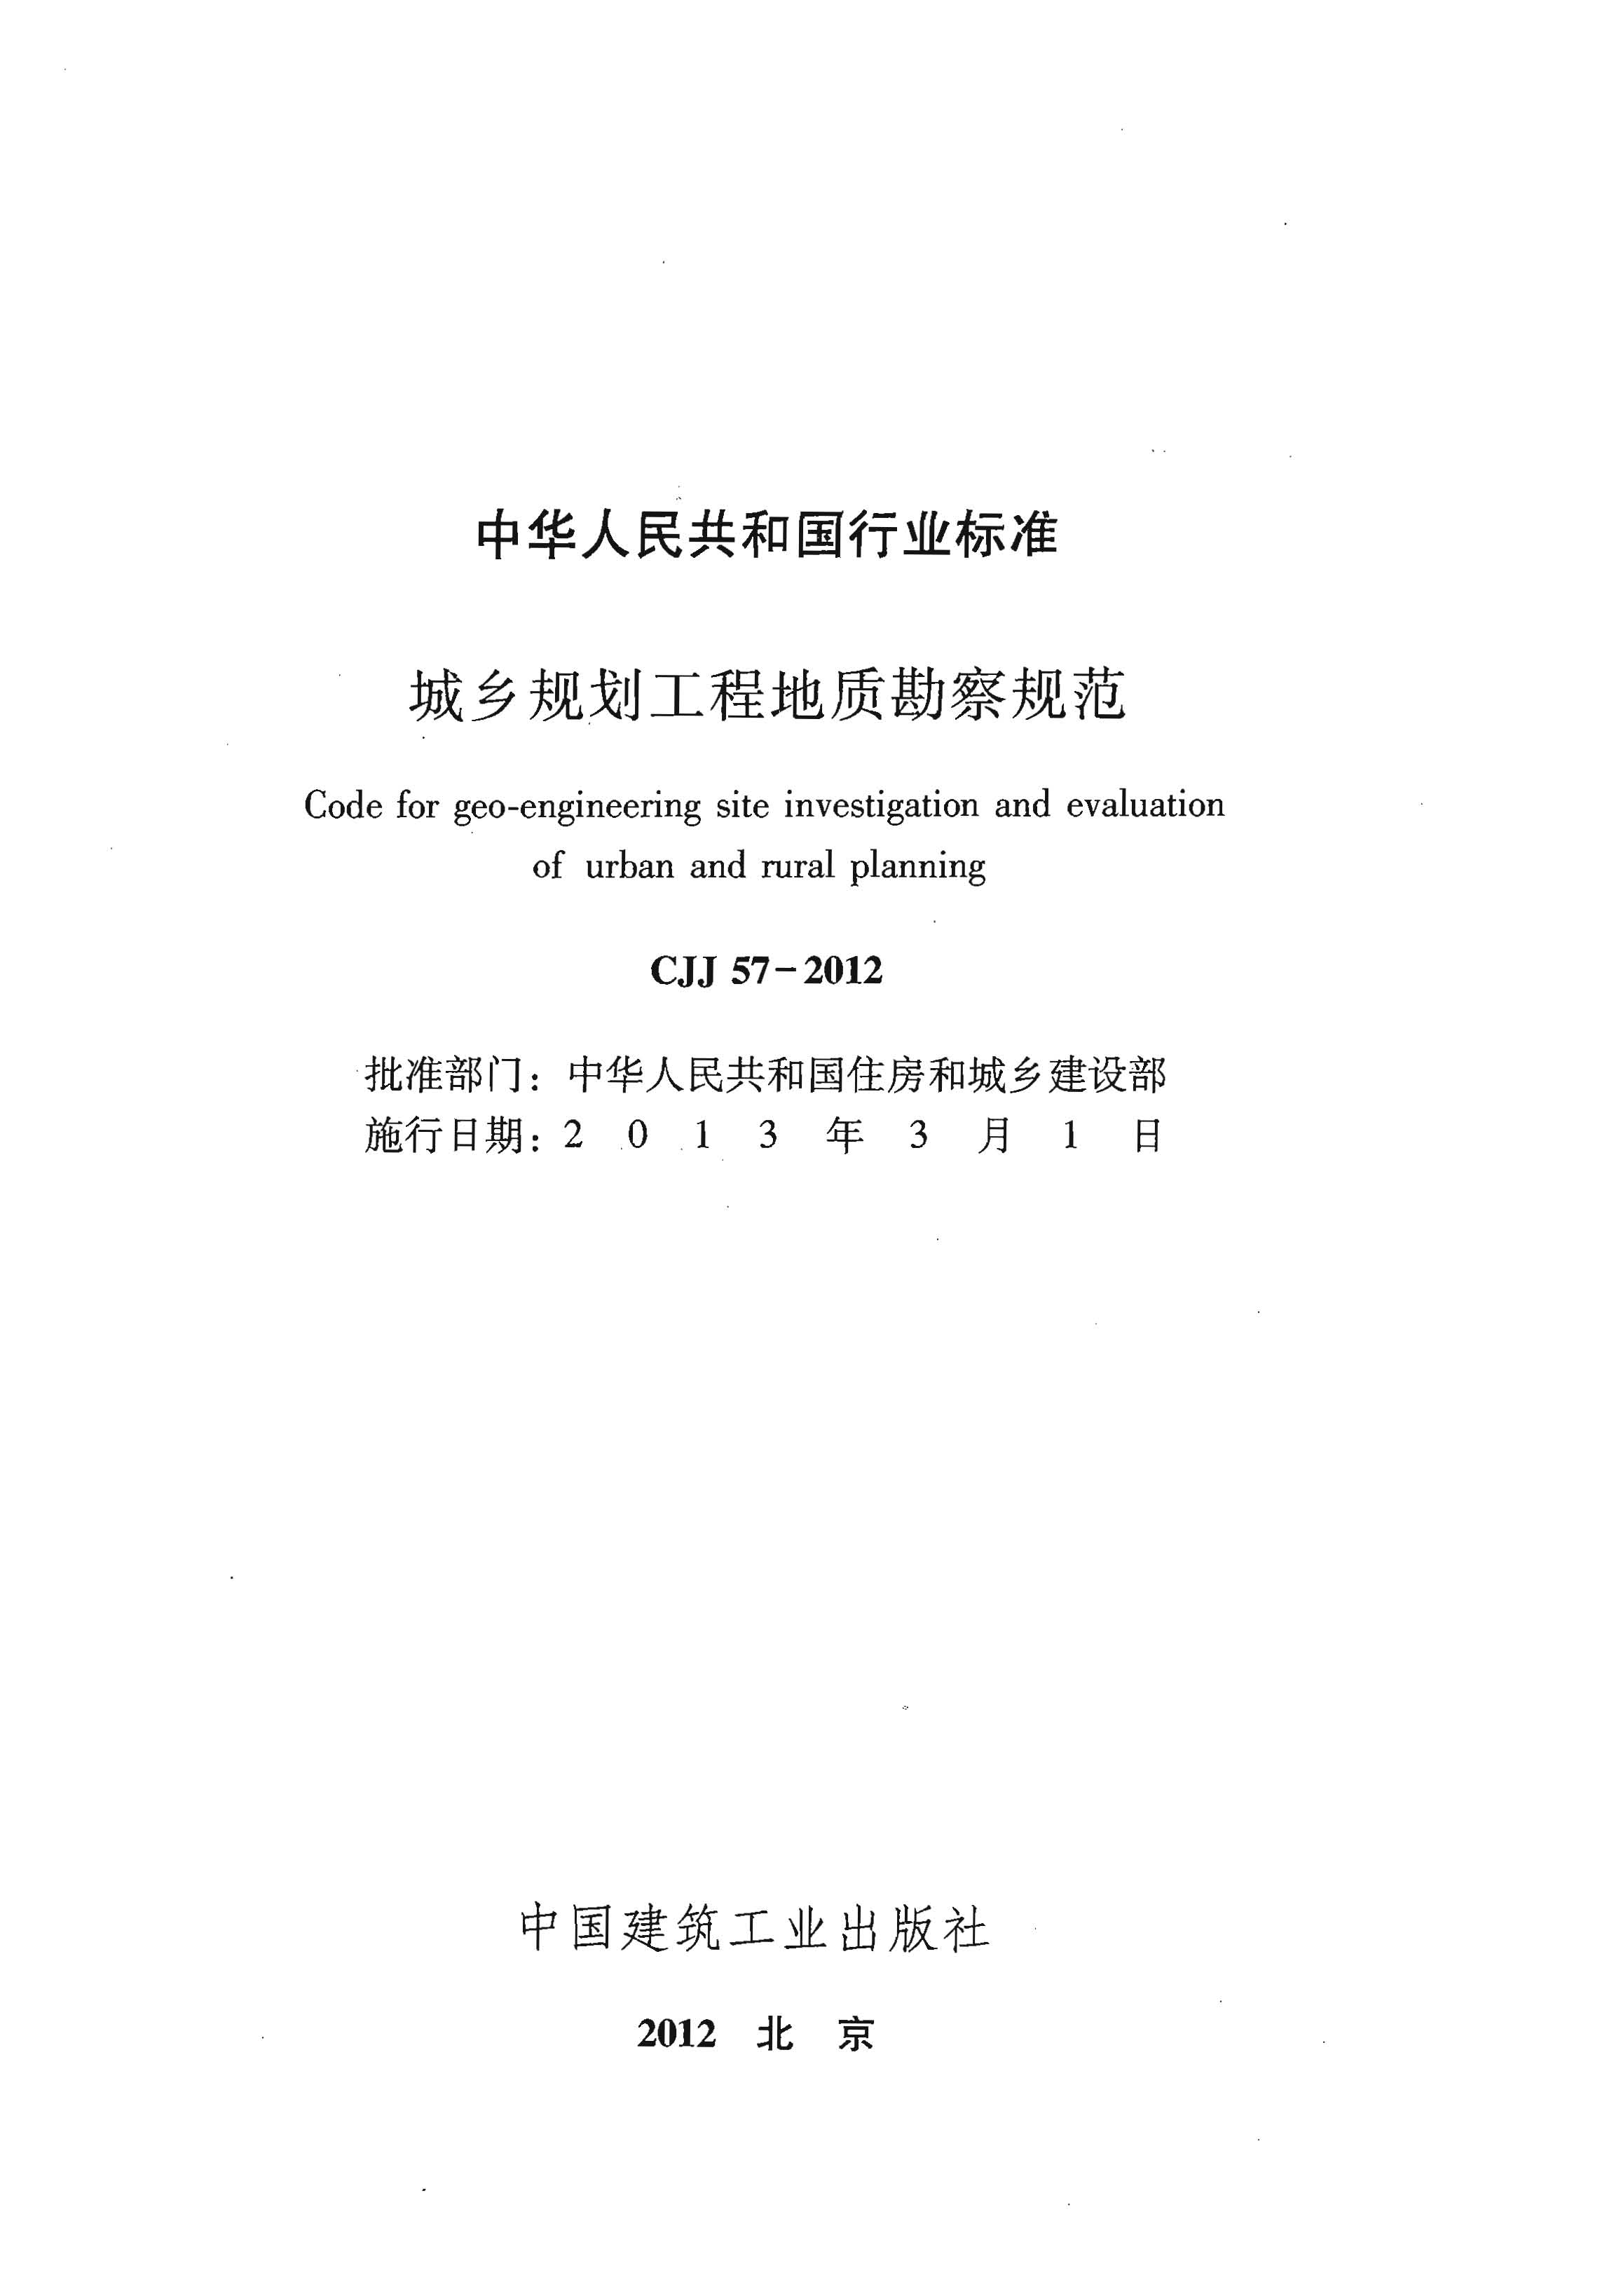 CJJ57-2012城鄉規劃工程地質勘察規范